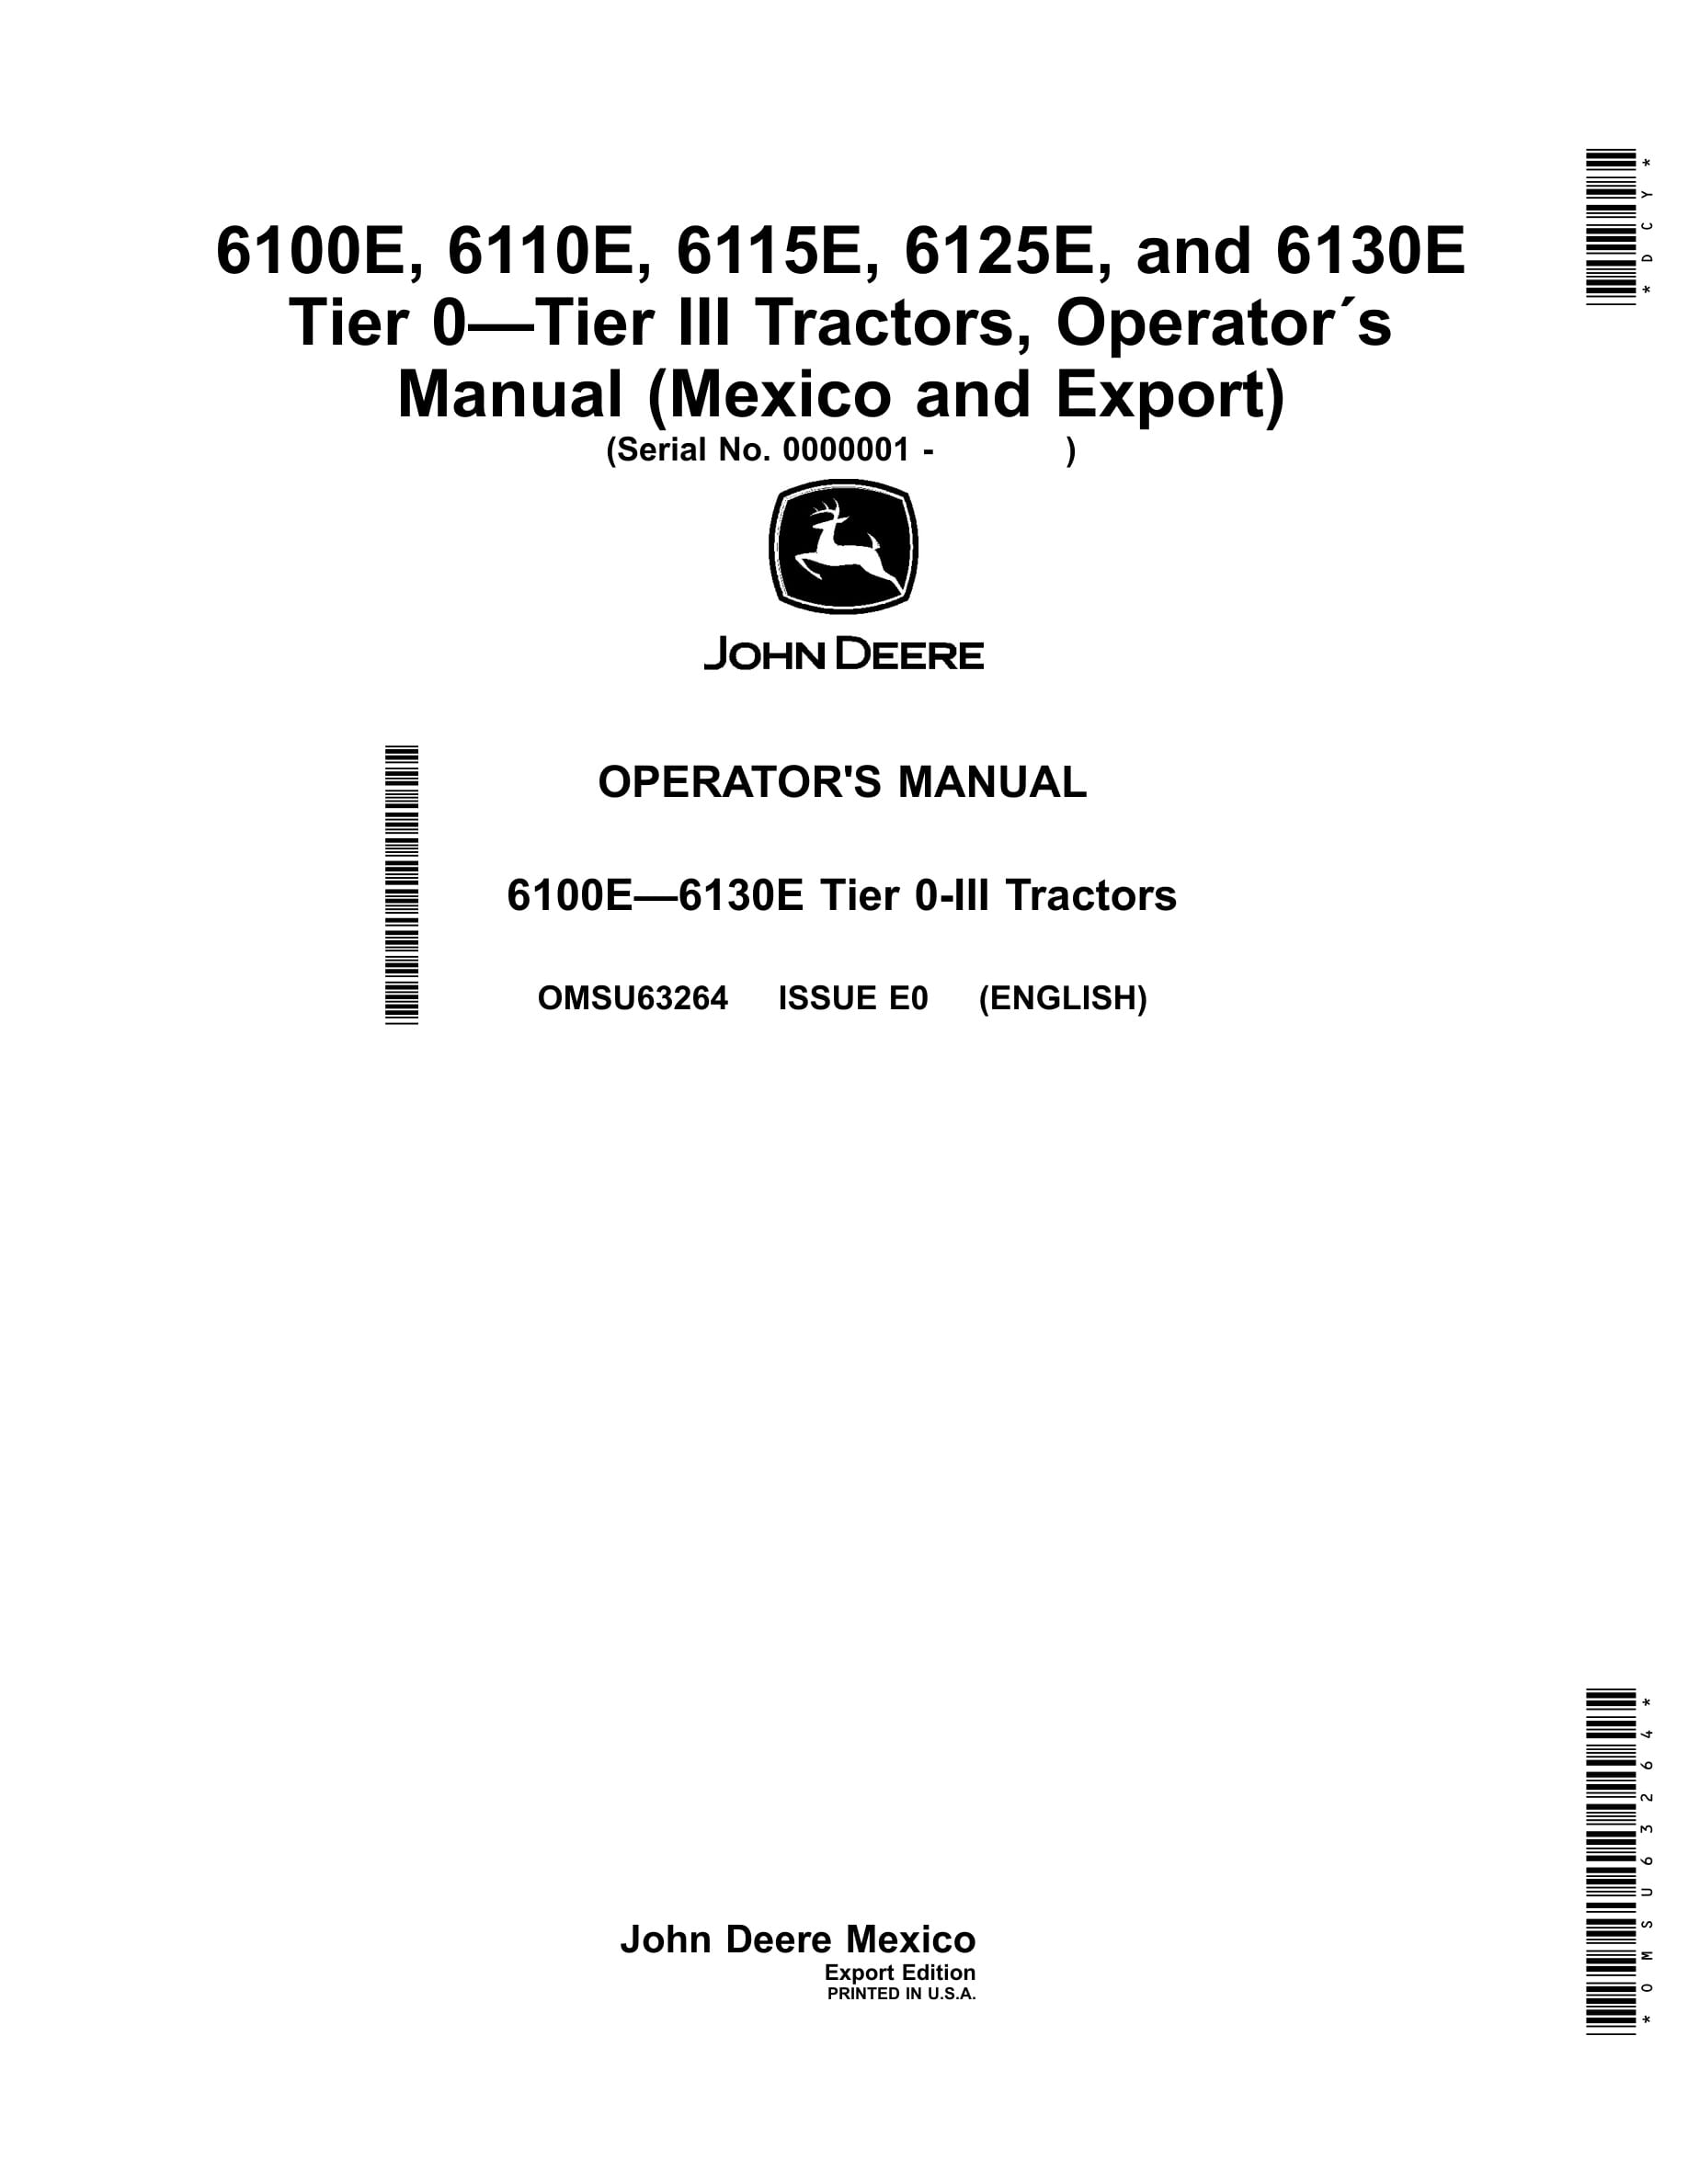 John Deere 6100e, 6110e, 6115e, 6125e, And 6130e Tier 0-tier Iii Tractors Operator Manuals OMSU63264-1